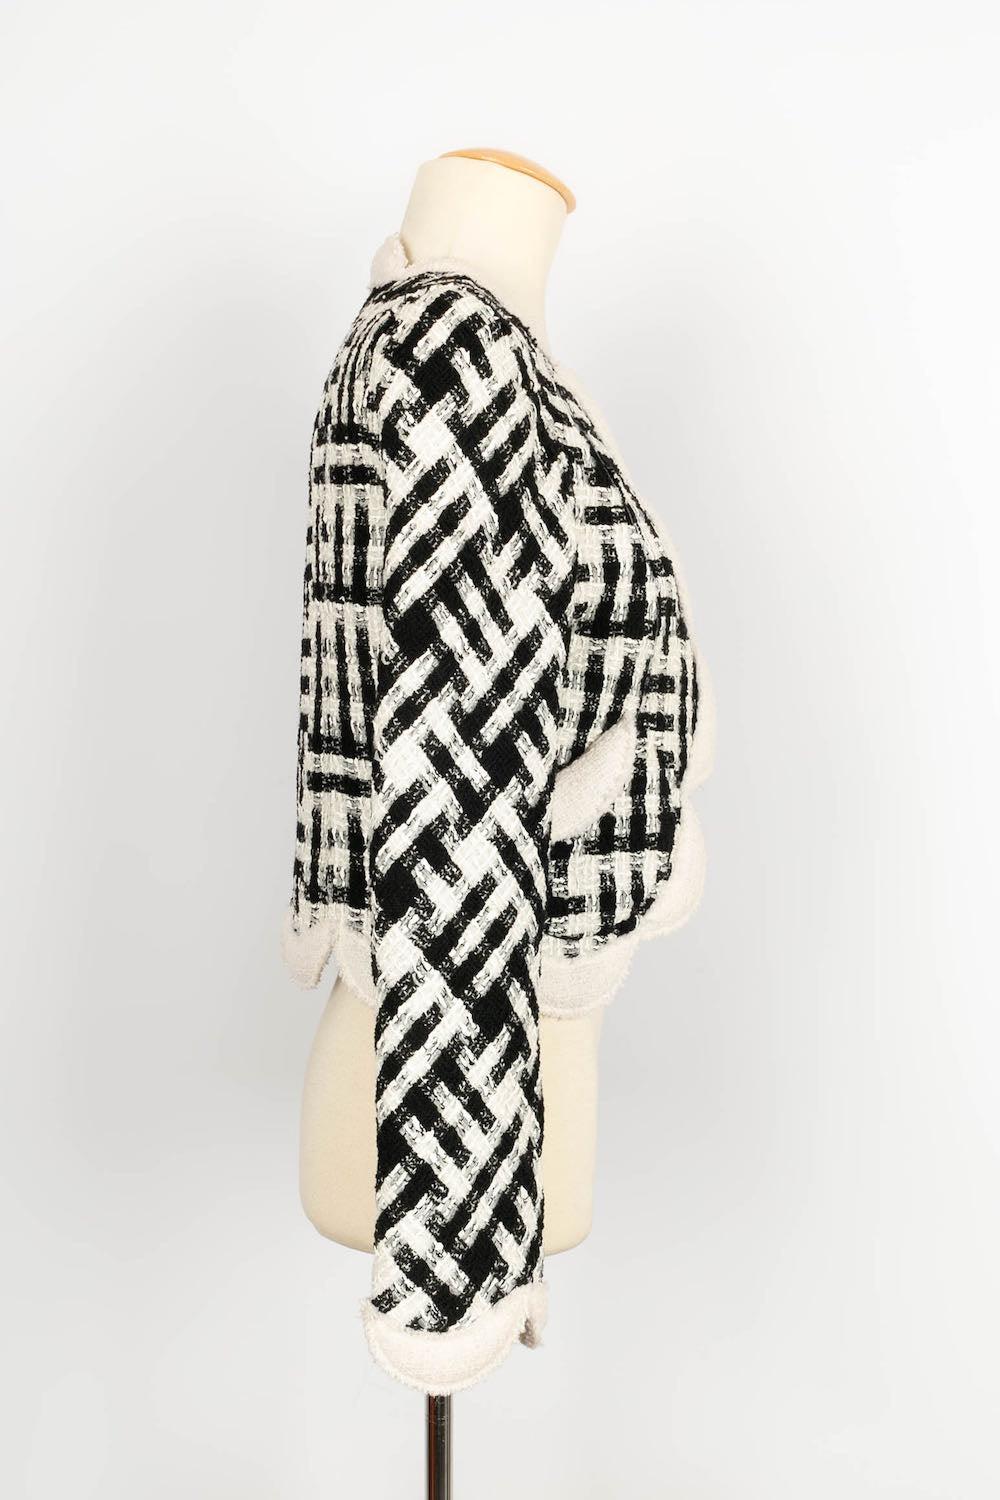 Marc Jocobs Tweed Jacket with Silk Lining In Excellent Condition For Sale In SAINT-OUEN-SUR-SEINE, FR